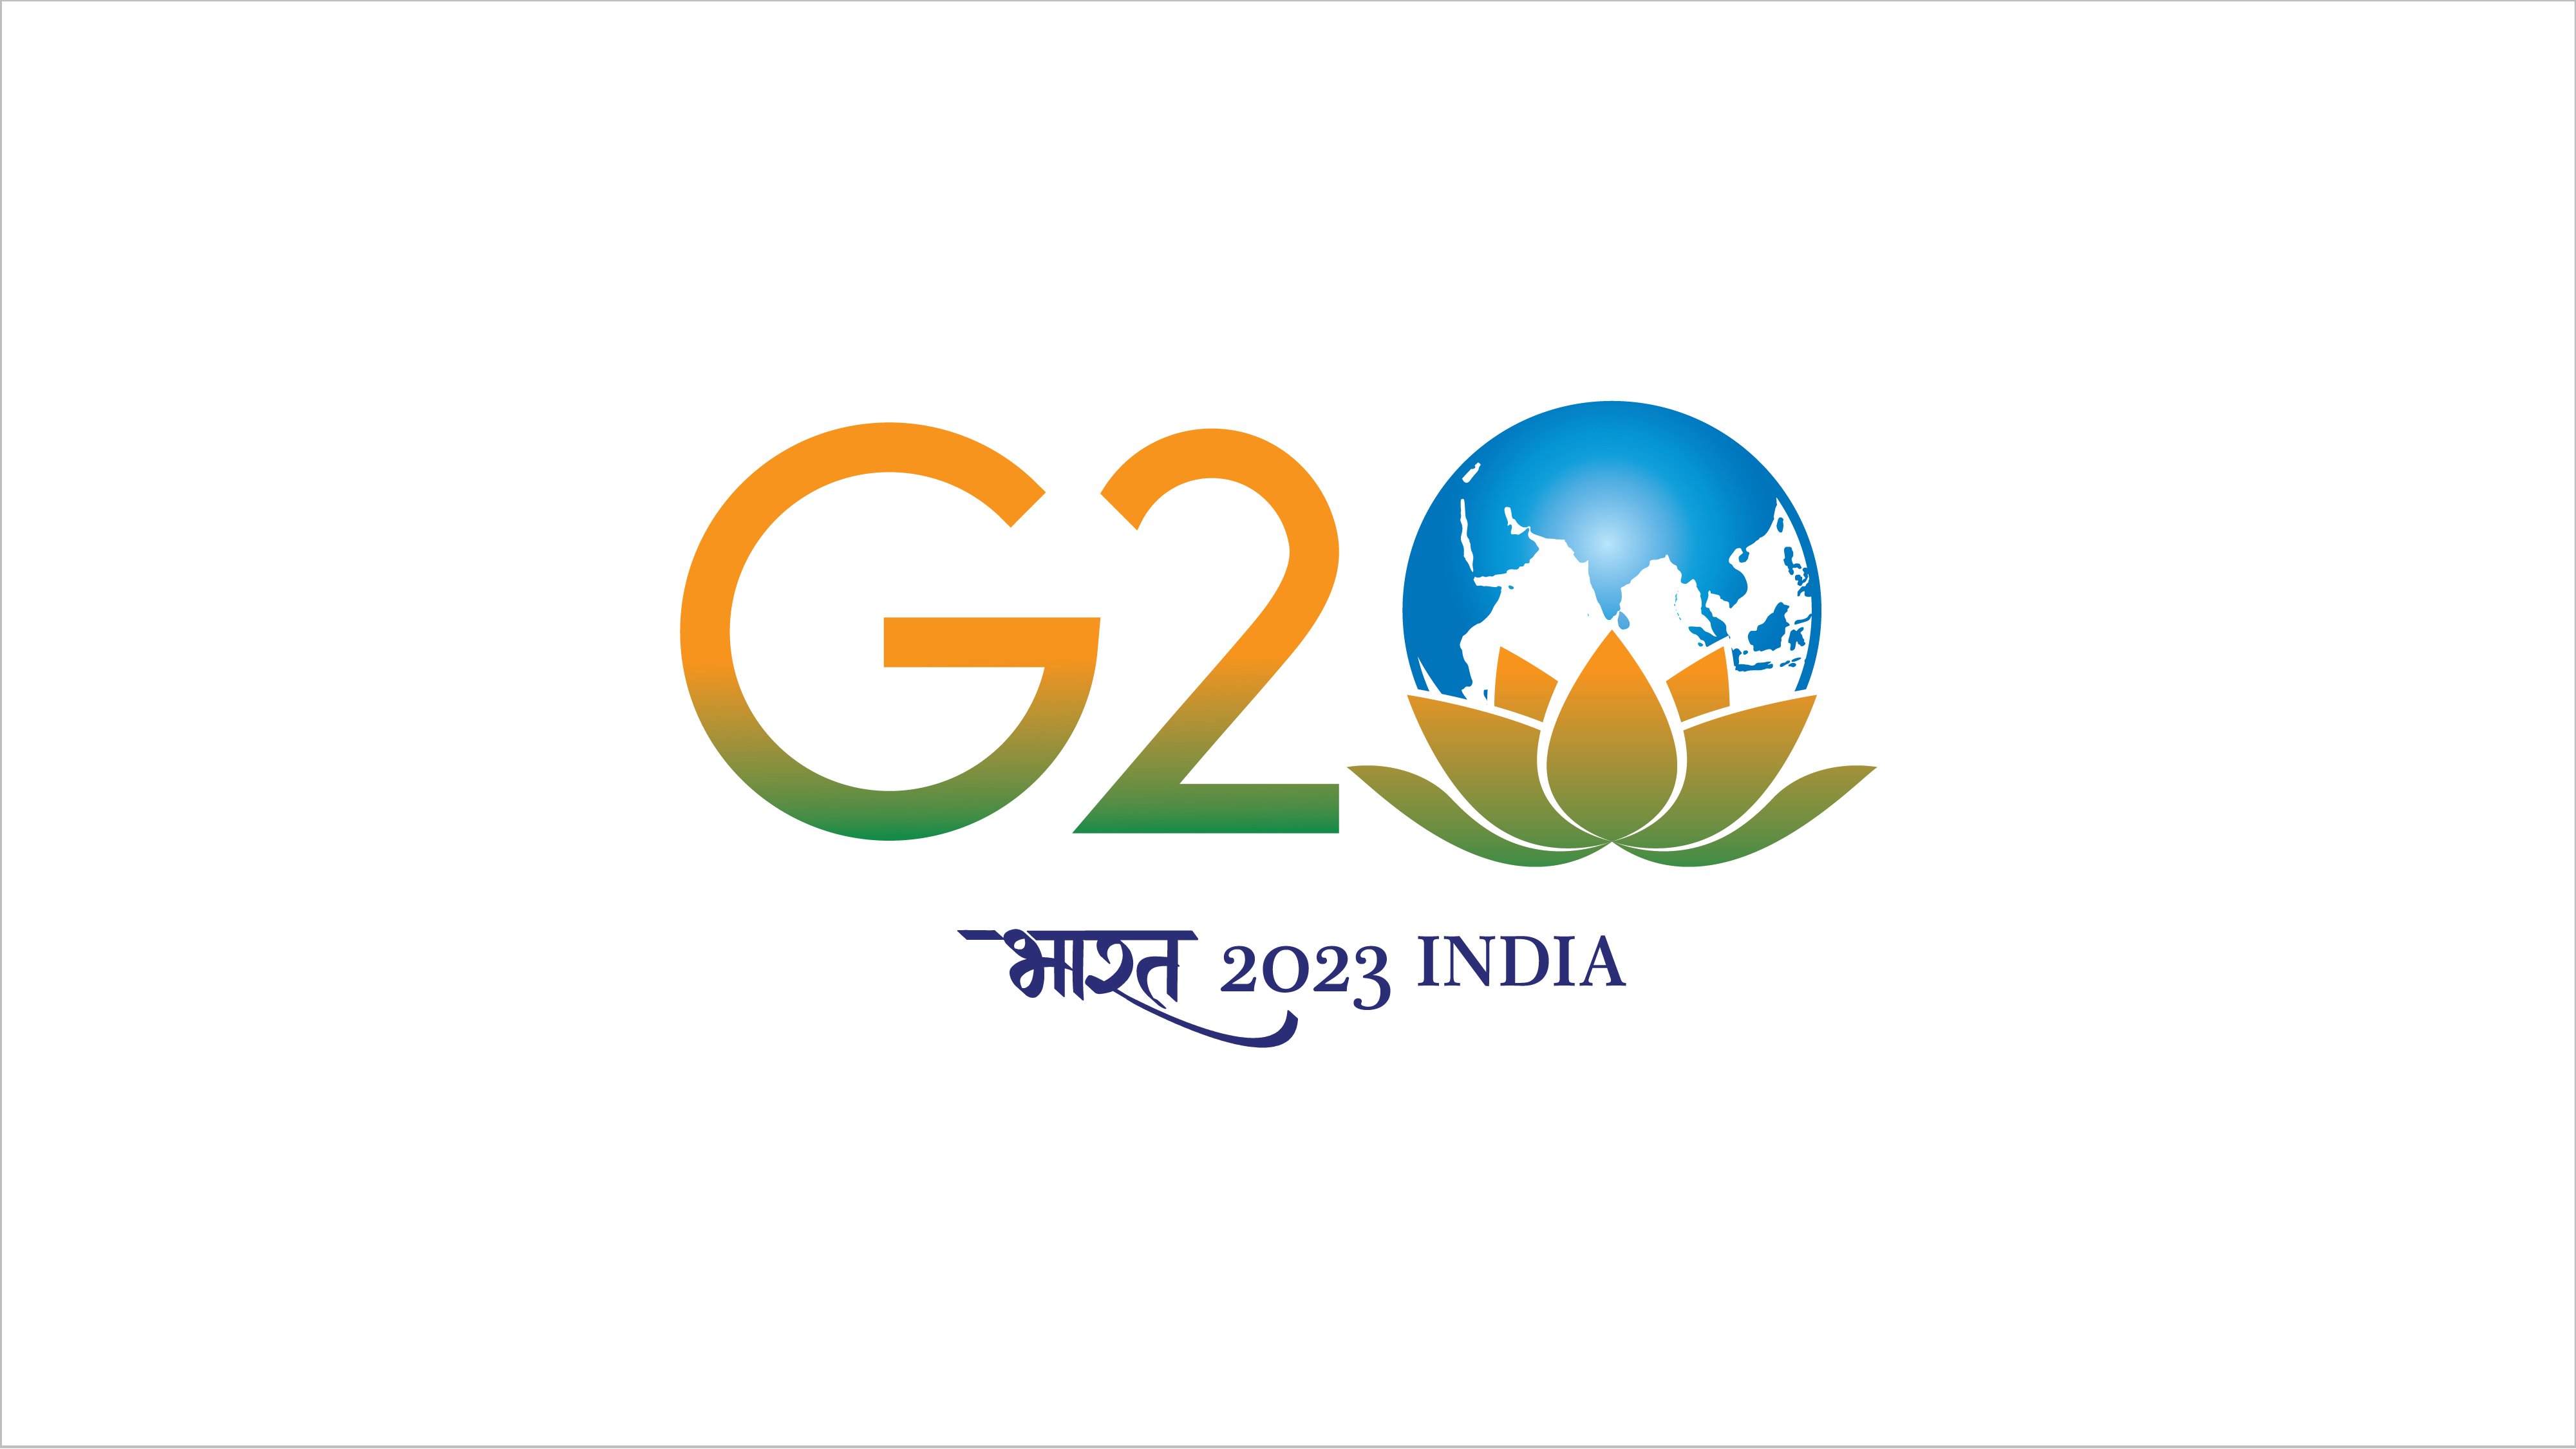 Disaster Risk Reduction under India’s Presidency in G-20